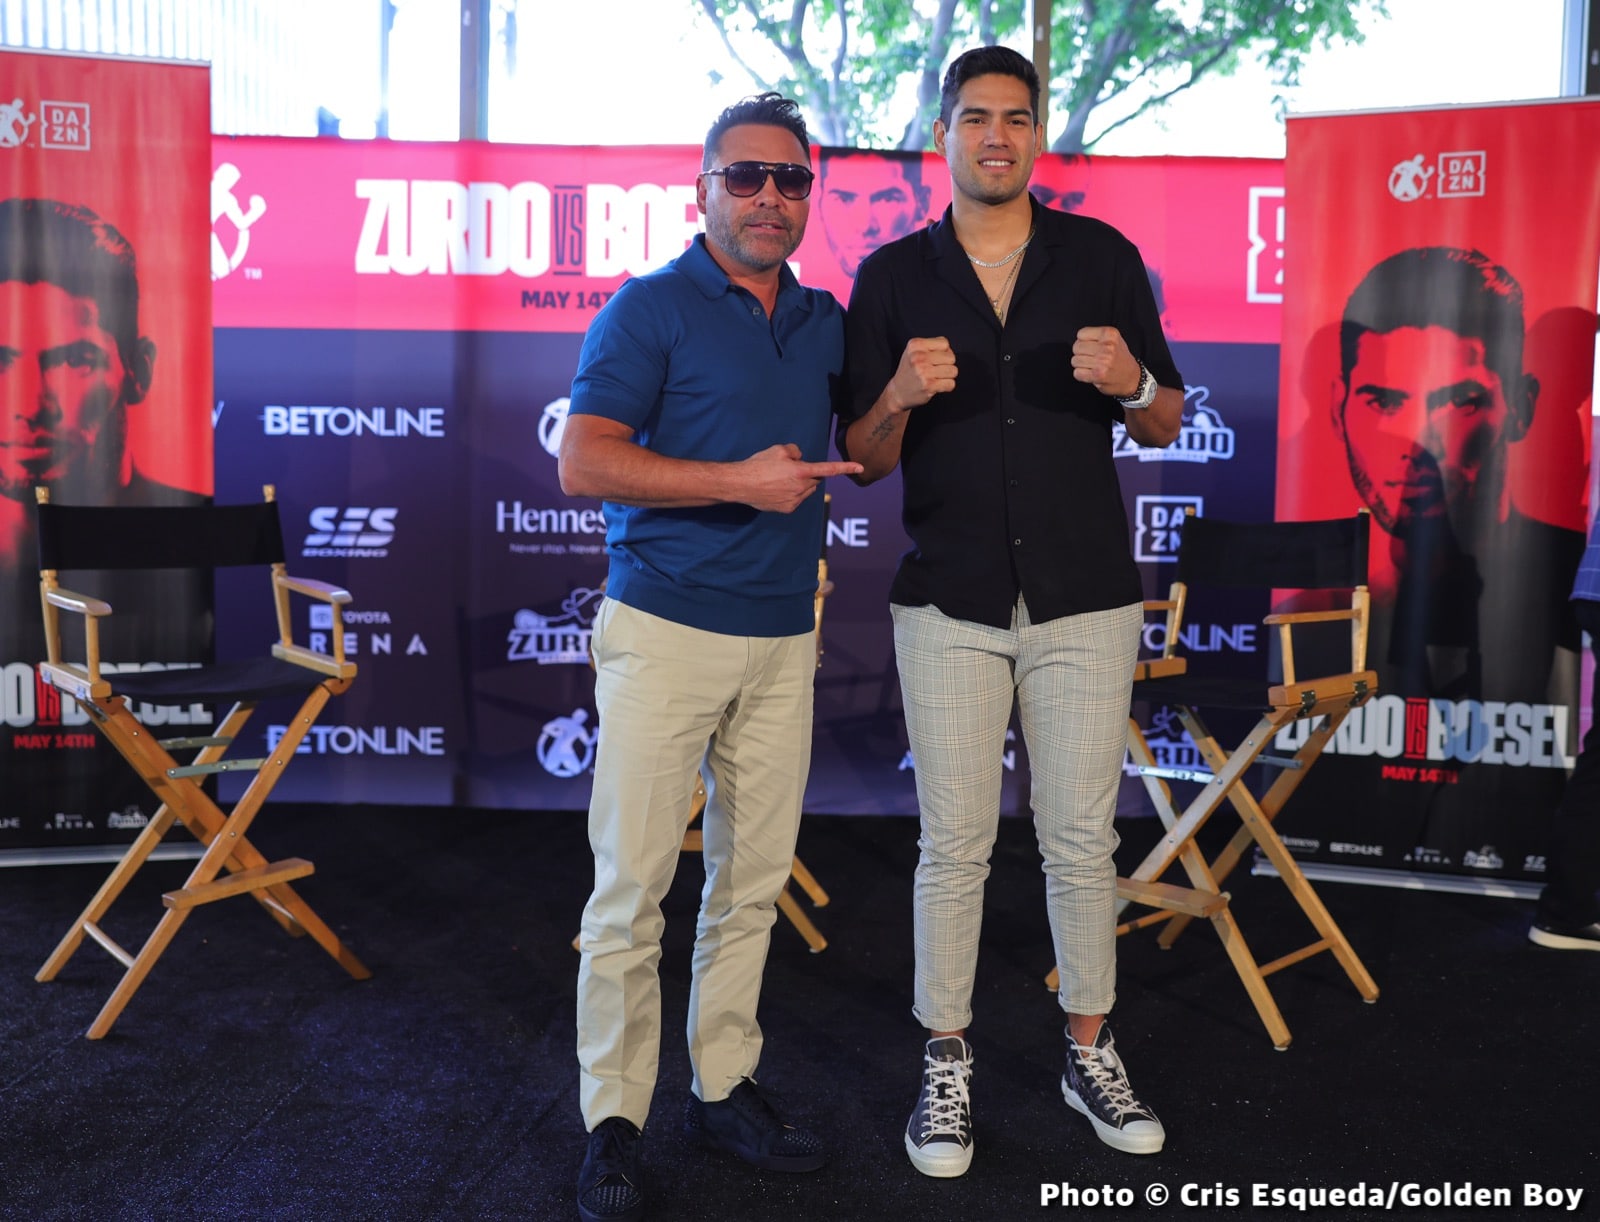 Dominic Boesel, Gilberto Ramirez boxing image / photo